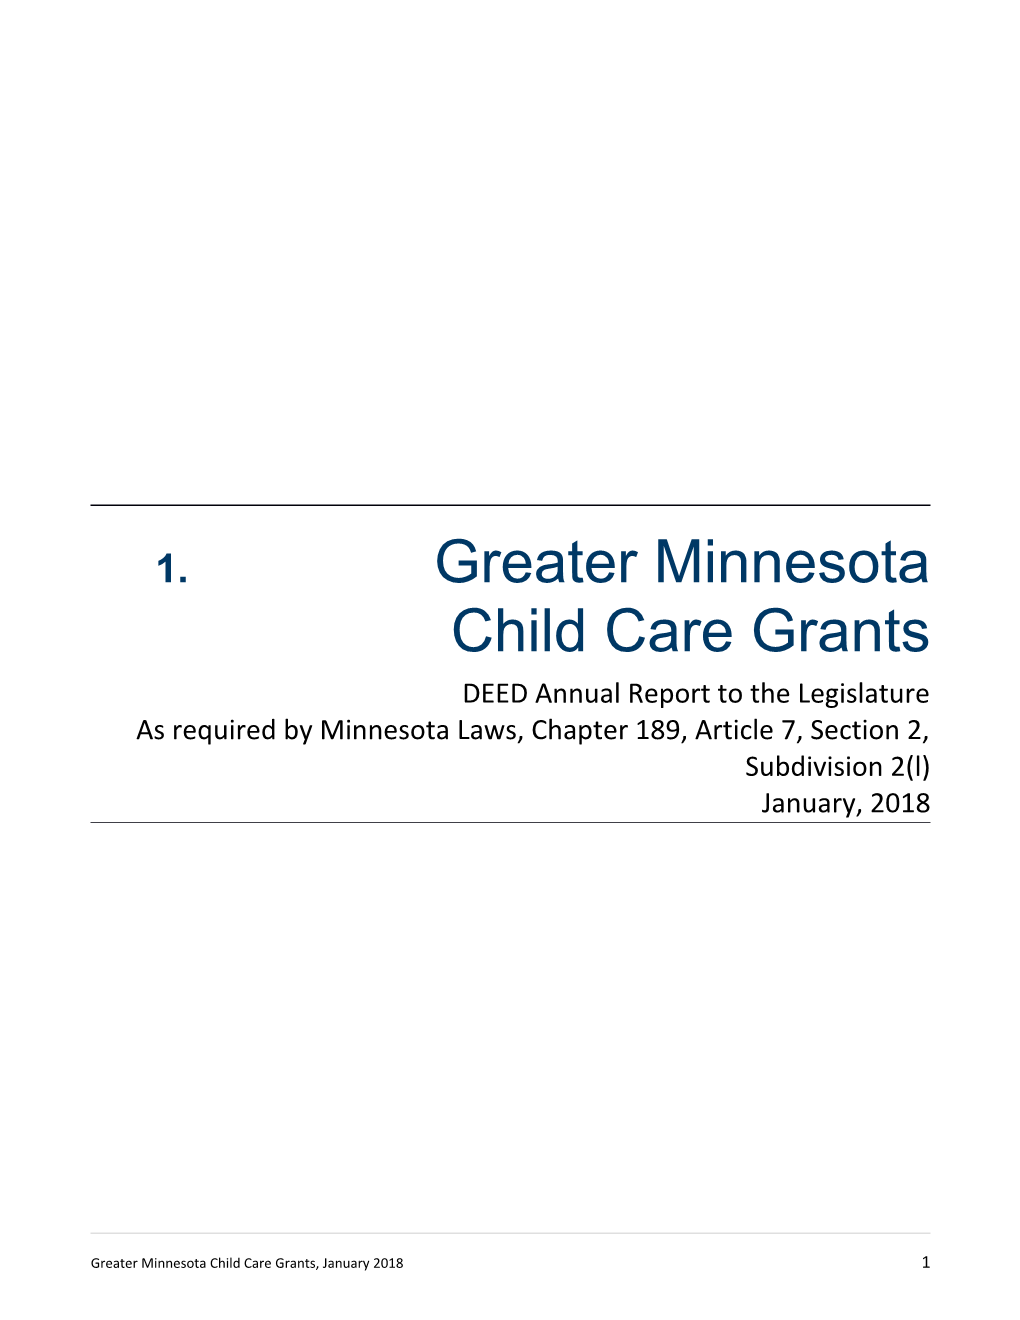 Greater Minnesota Child Care Grants